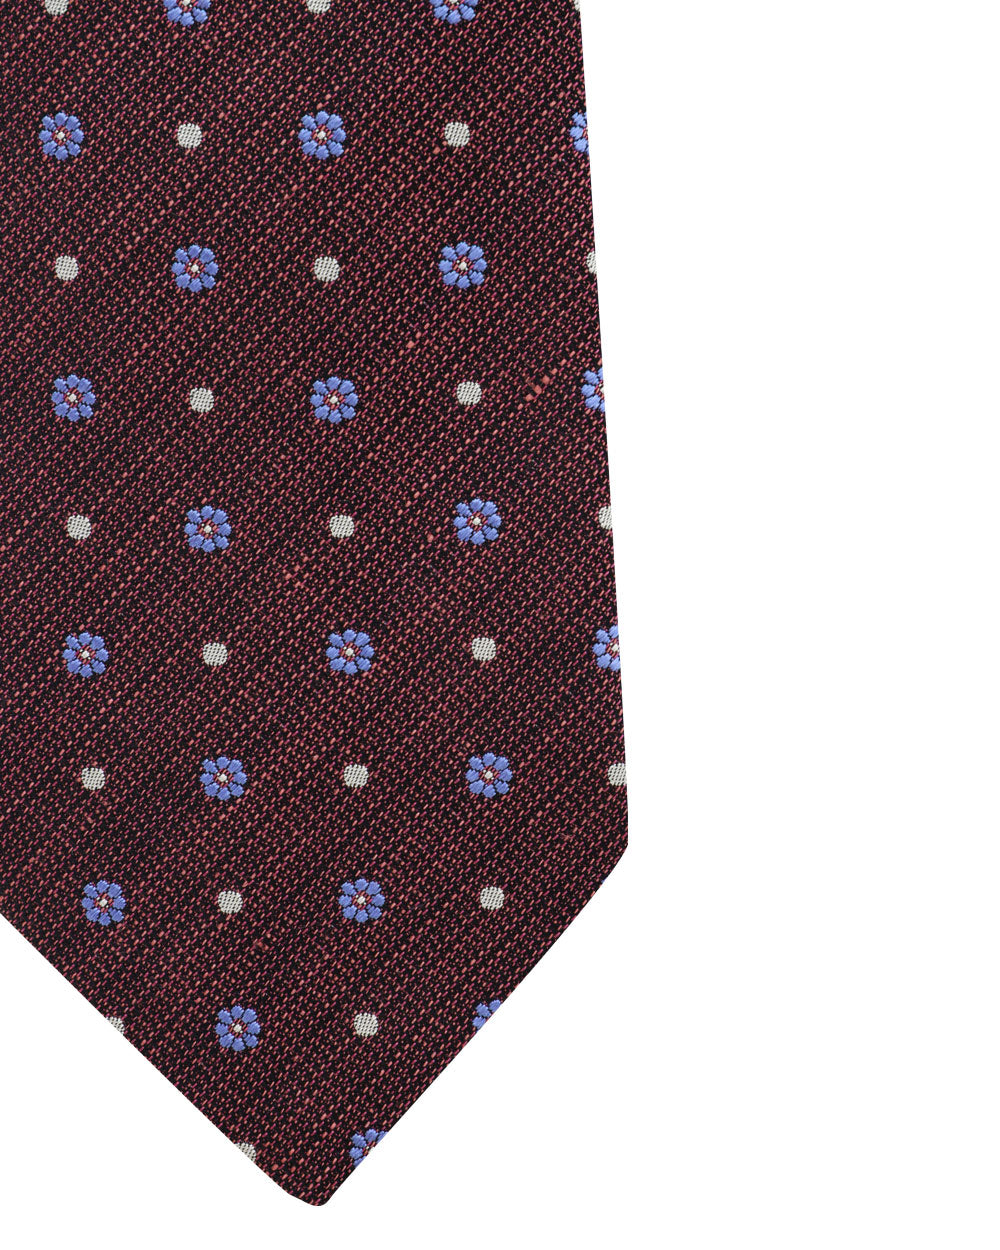 Maroon and Blue Flower Print Silk Blend Tie